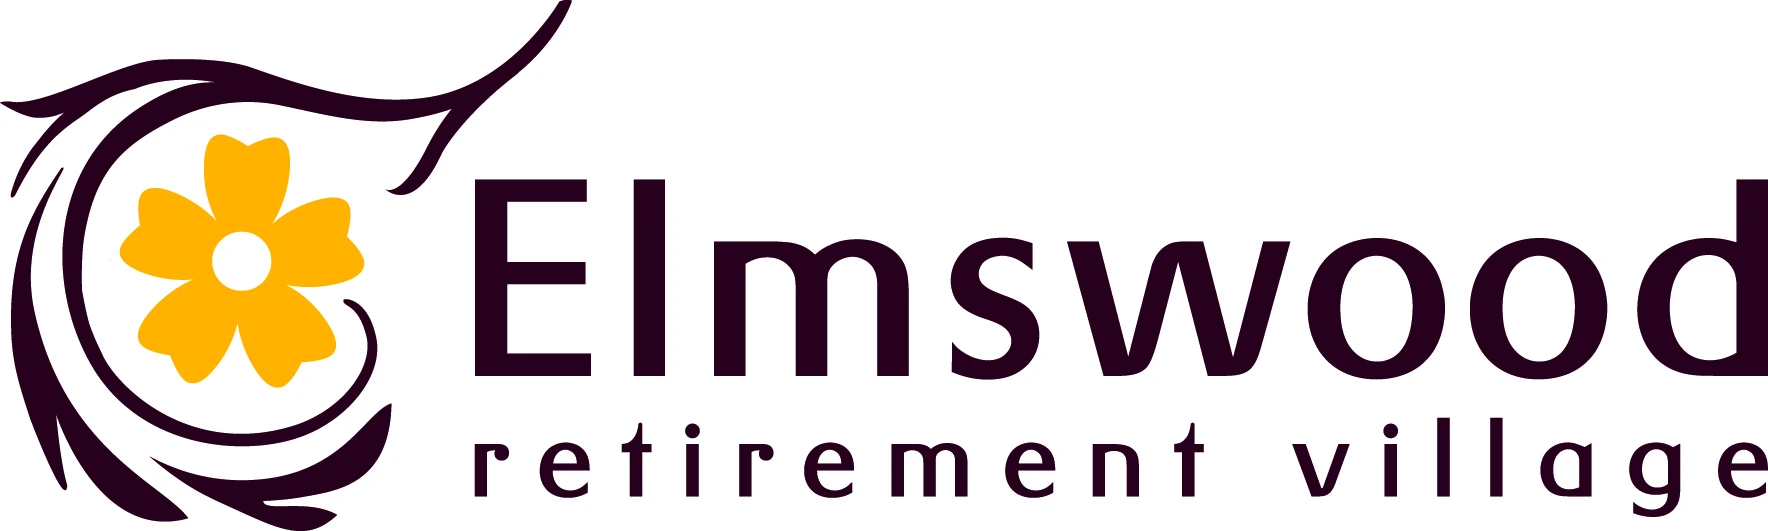 Elmswood Retirement Village (Rest home and Hospital) logo